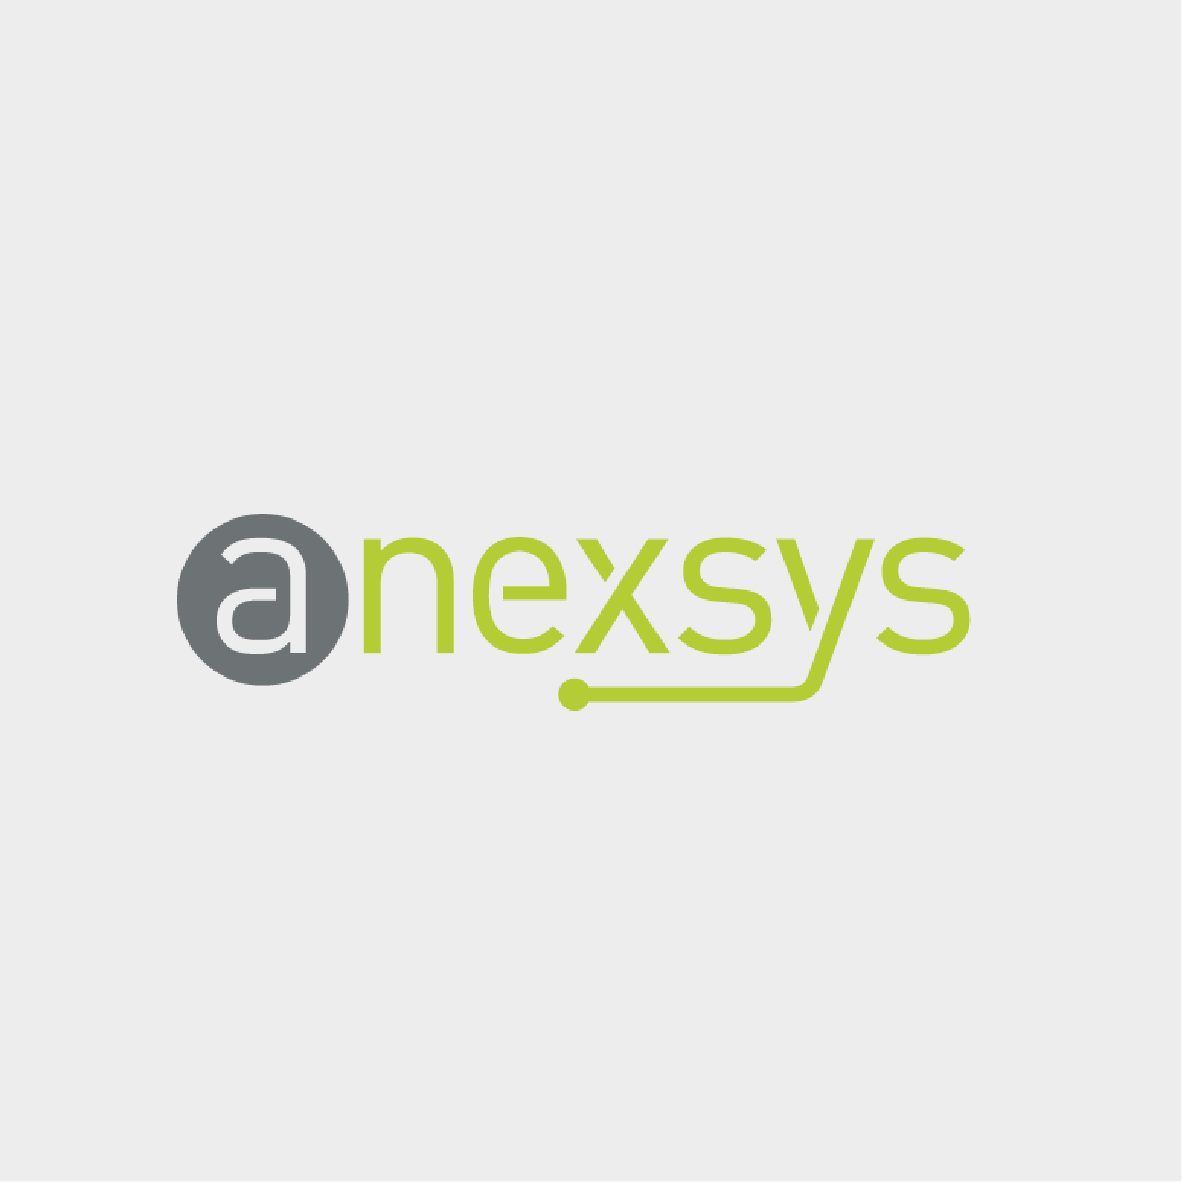 Anexsys Seed